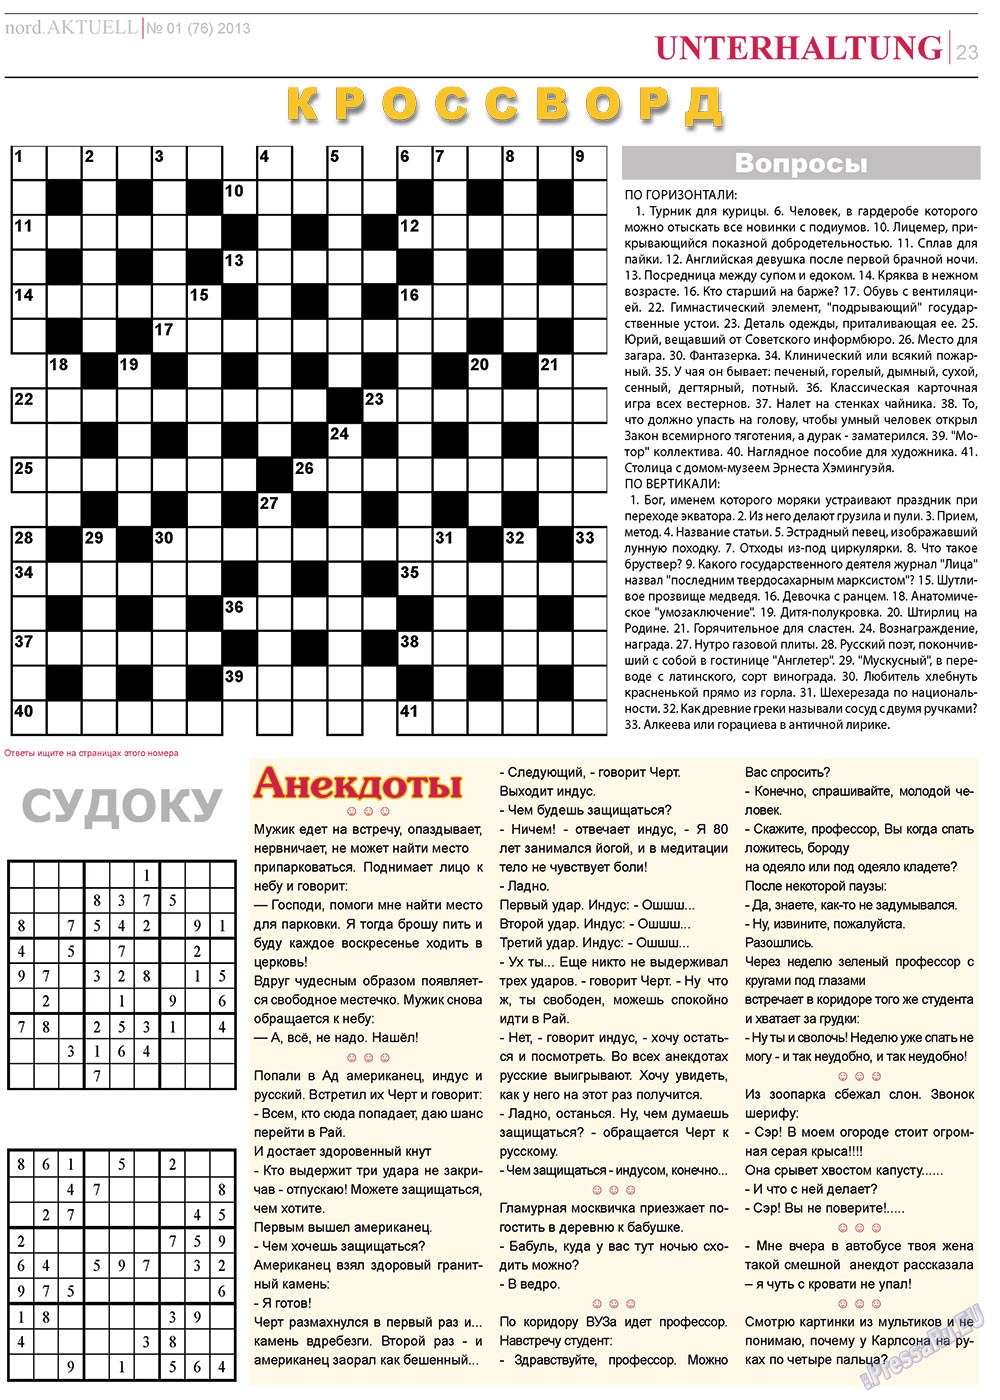 nord.Aktuell (газета). 2013 год, номер 1, стр. 23